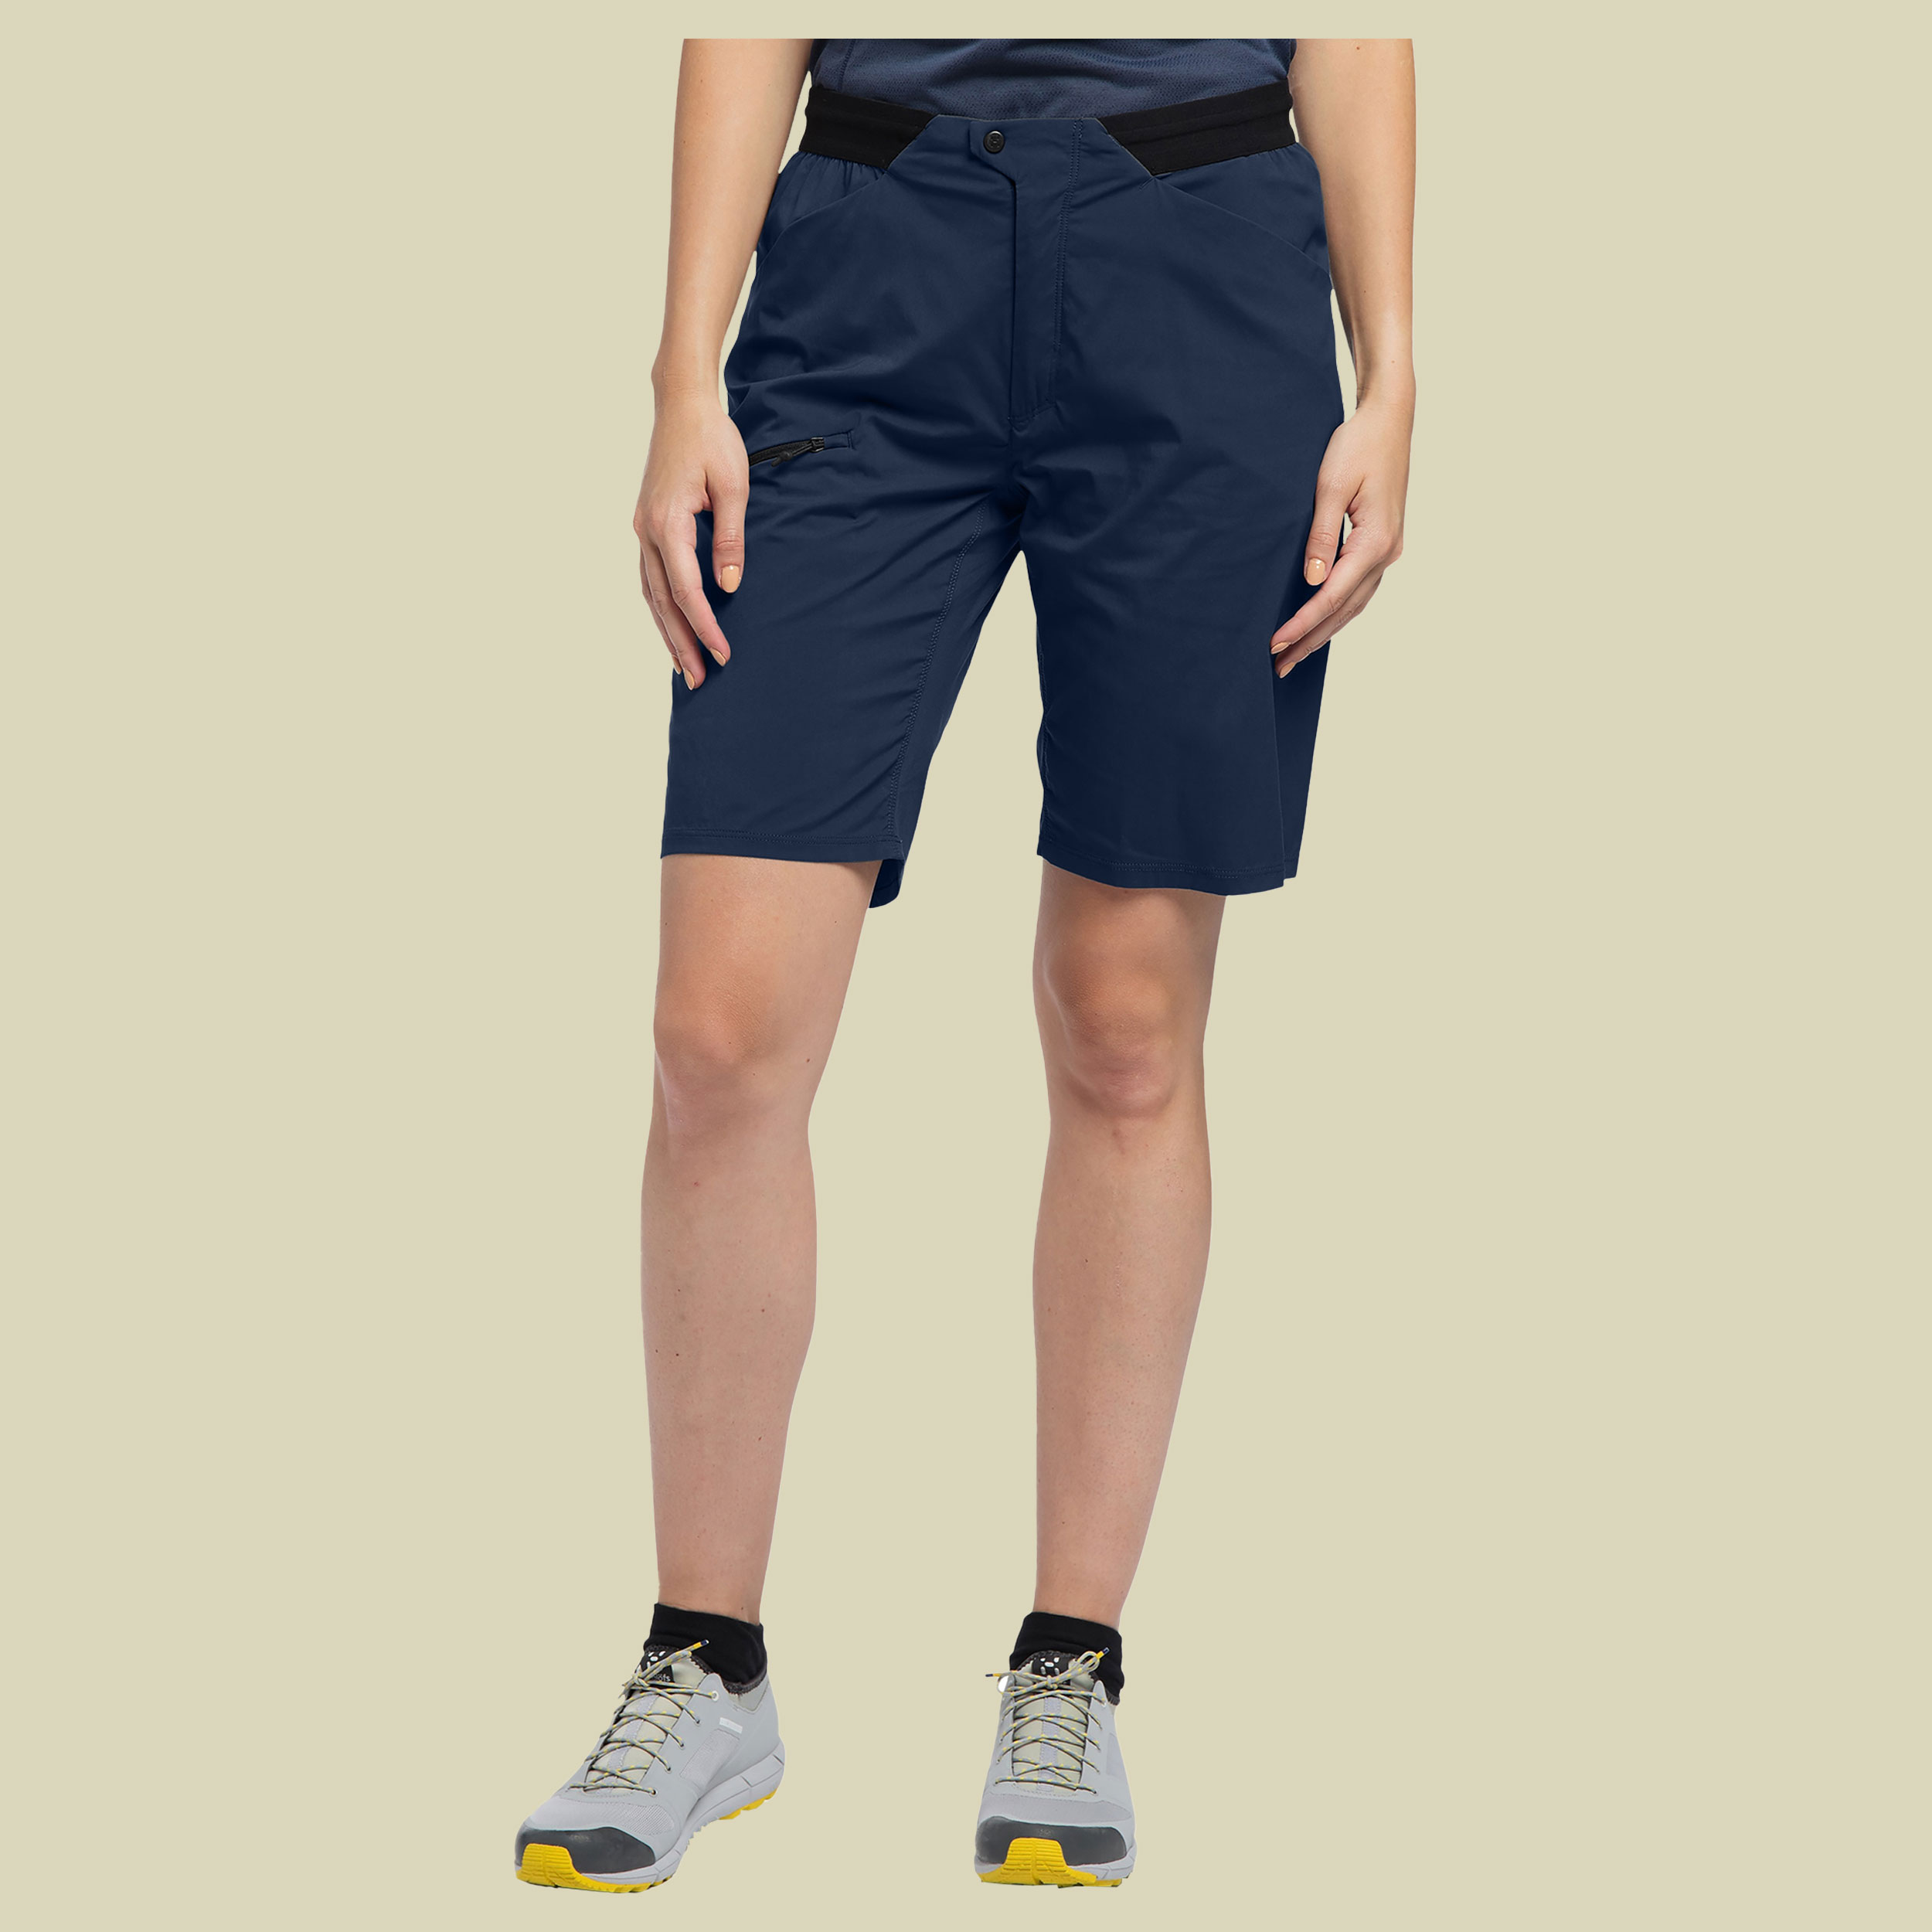 L.I.M Fuse Shorts Women Größe 38 Farbe tarn blue